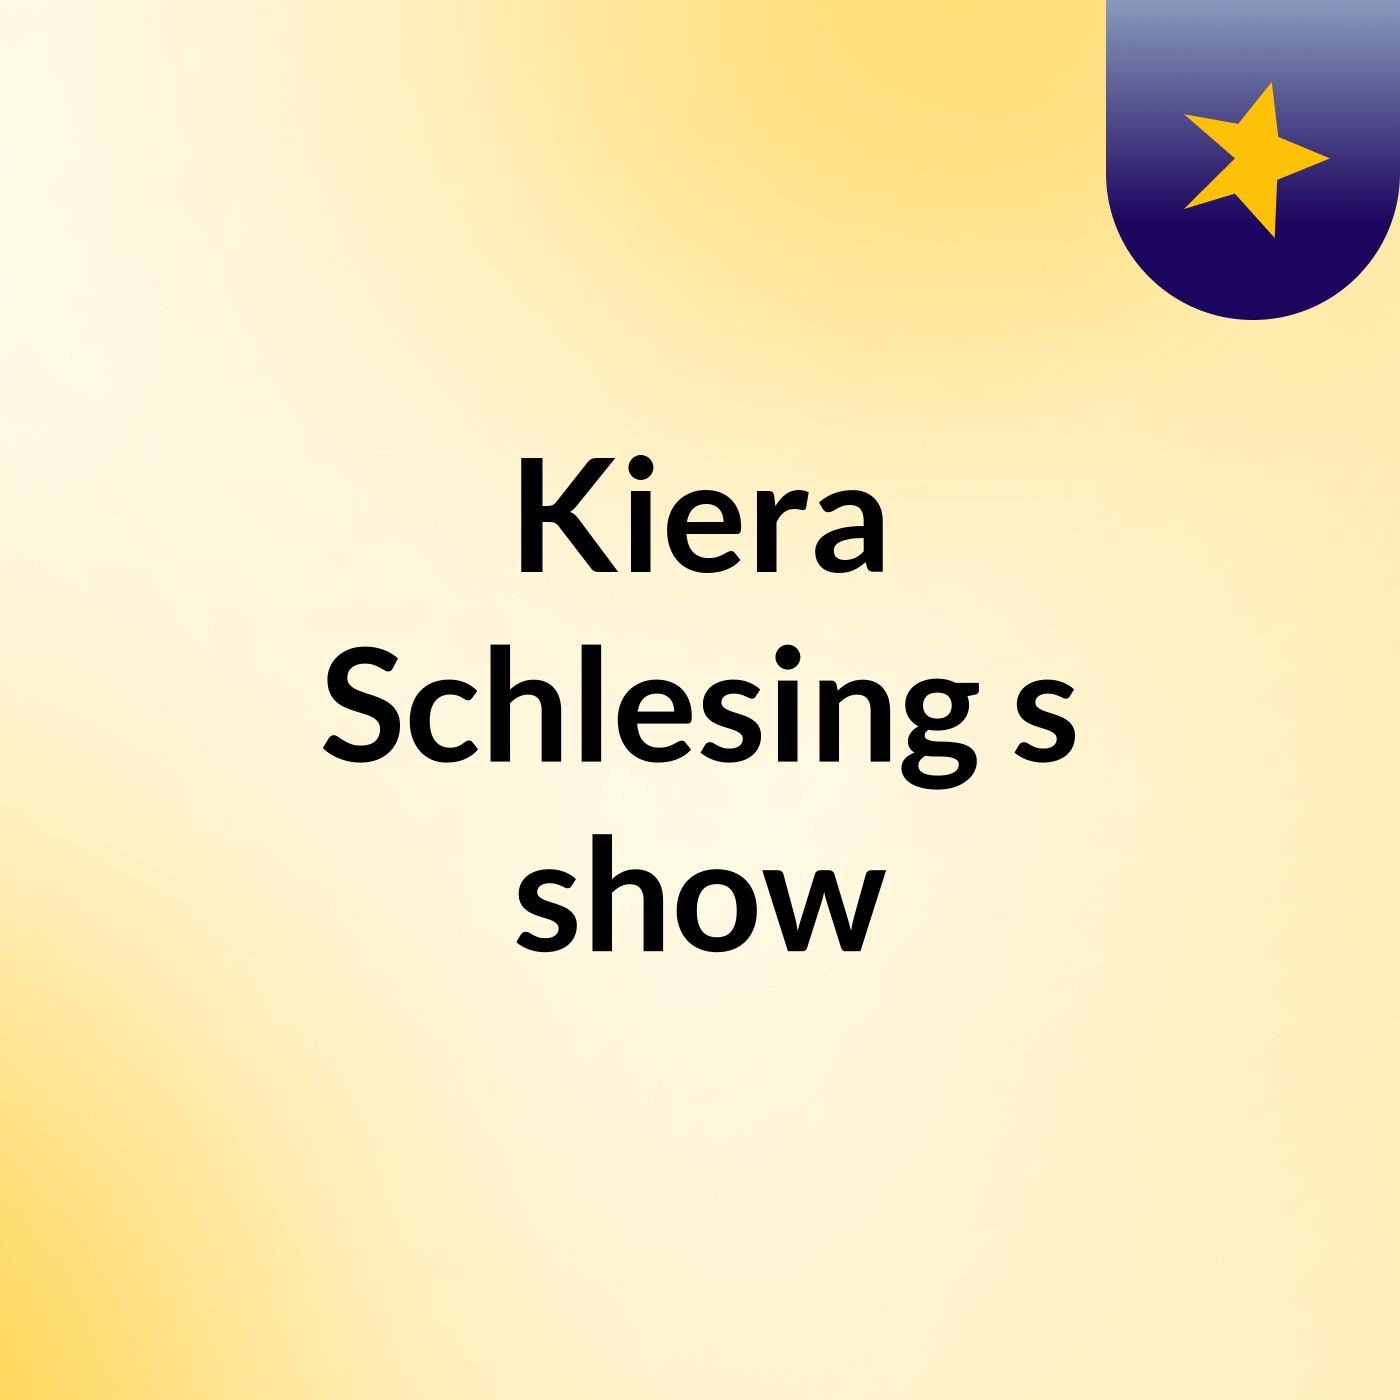 Kiera Schlesing's show